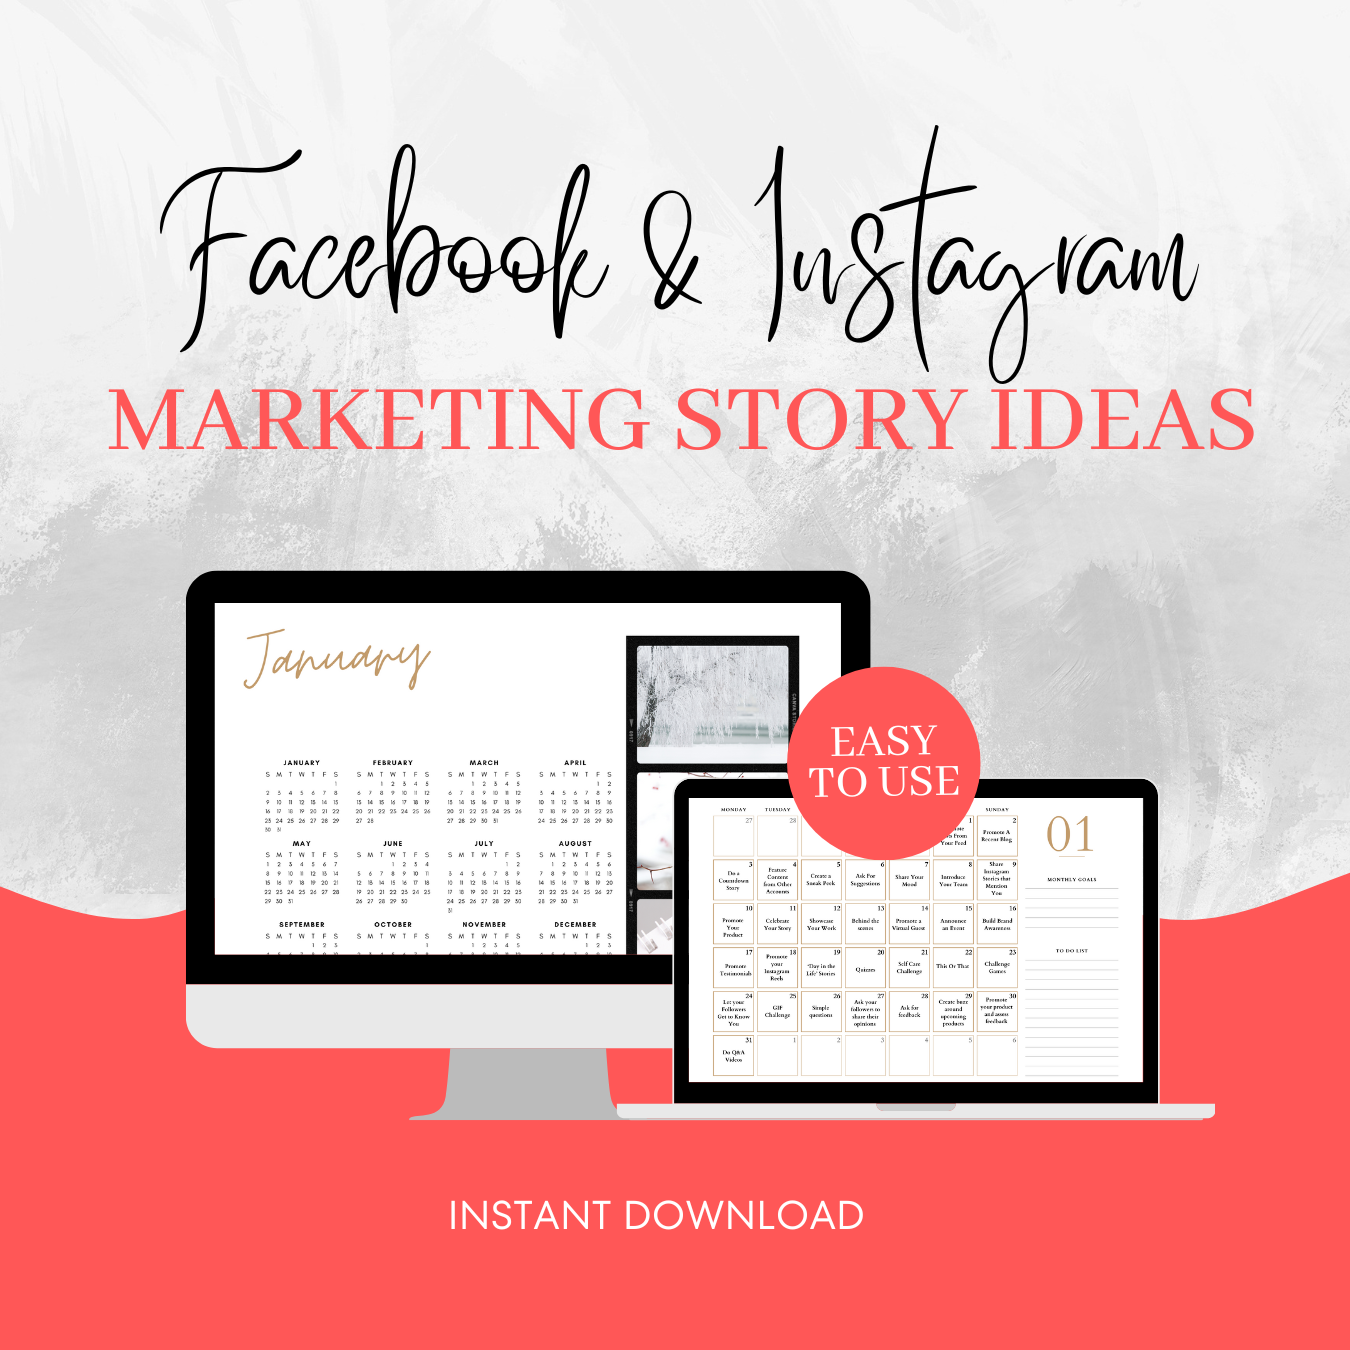 Facebook & Instagram Marketing Story Ideas